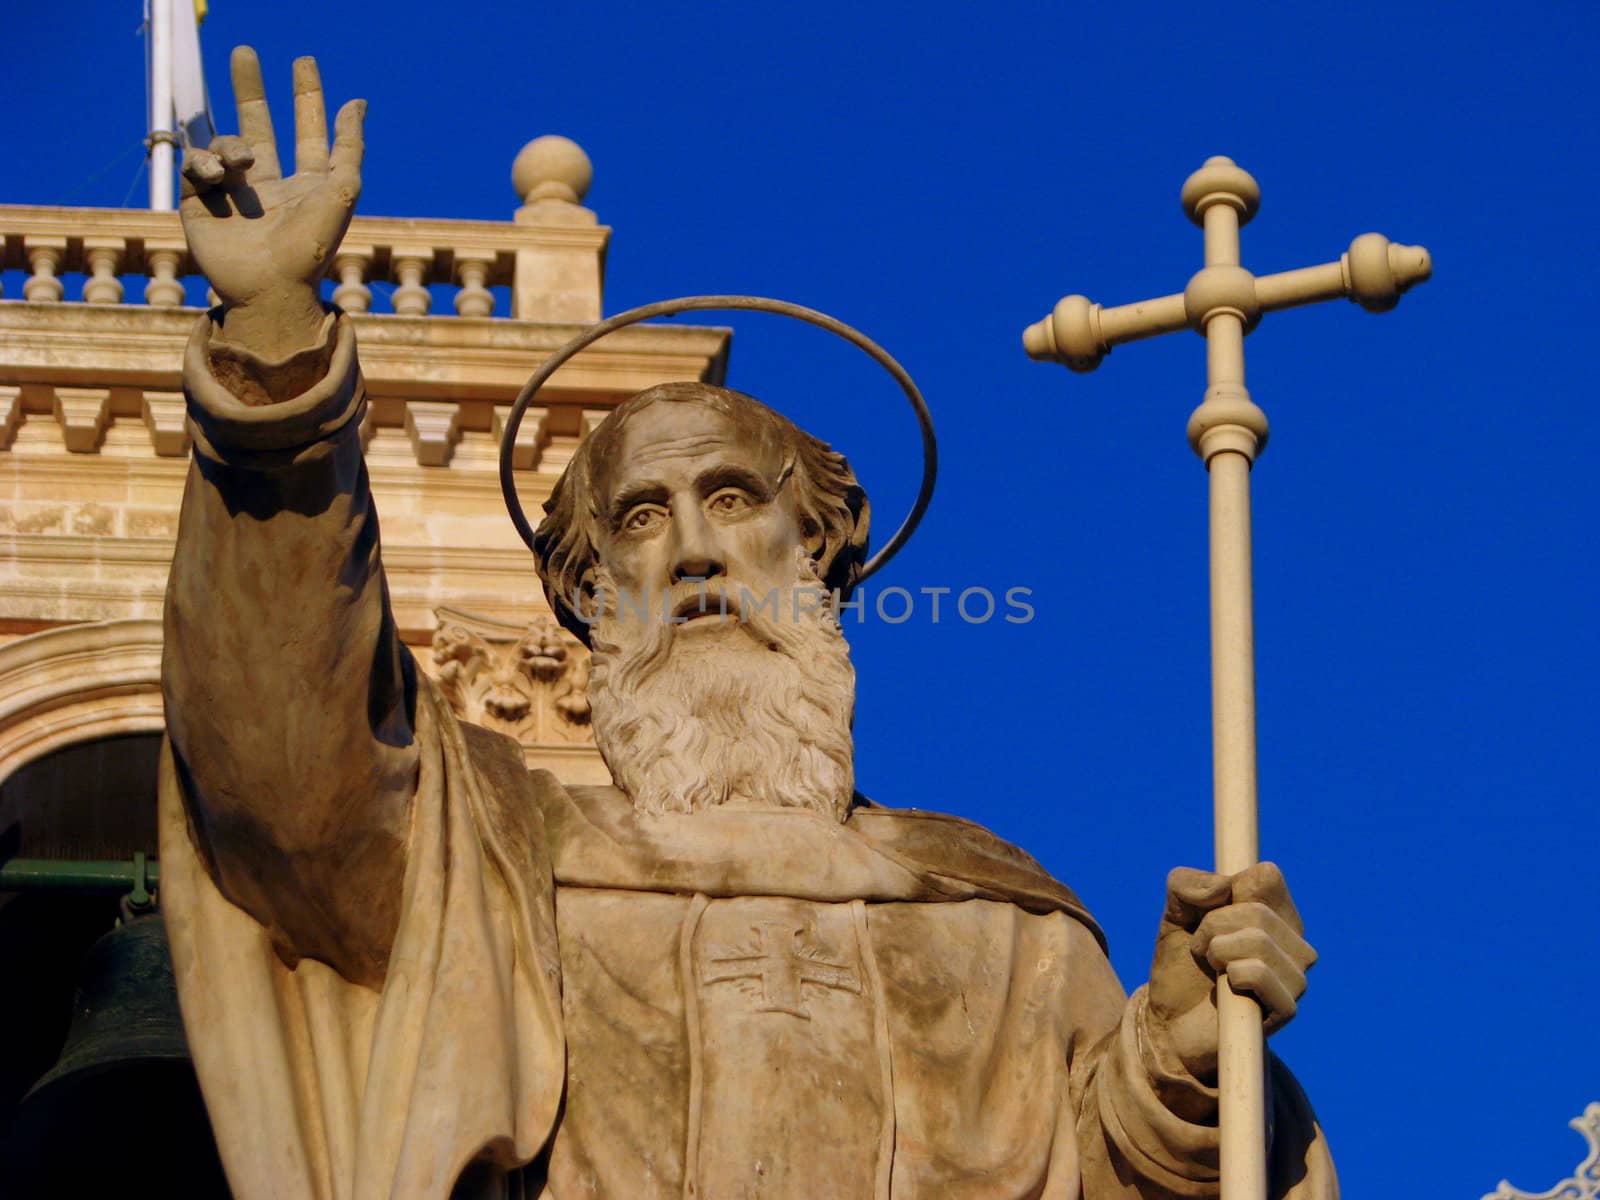 A detail of the stone statue of Saint Philip in Zebbug, Malta.